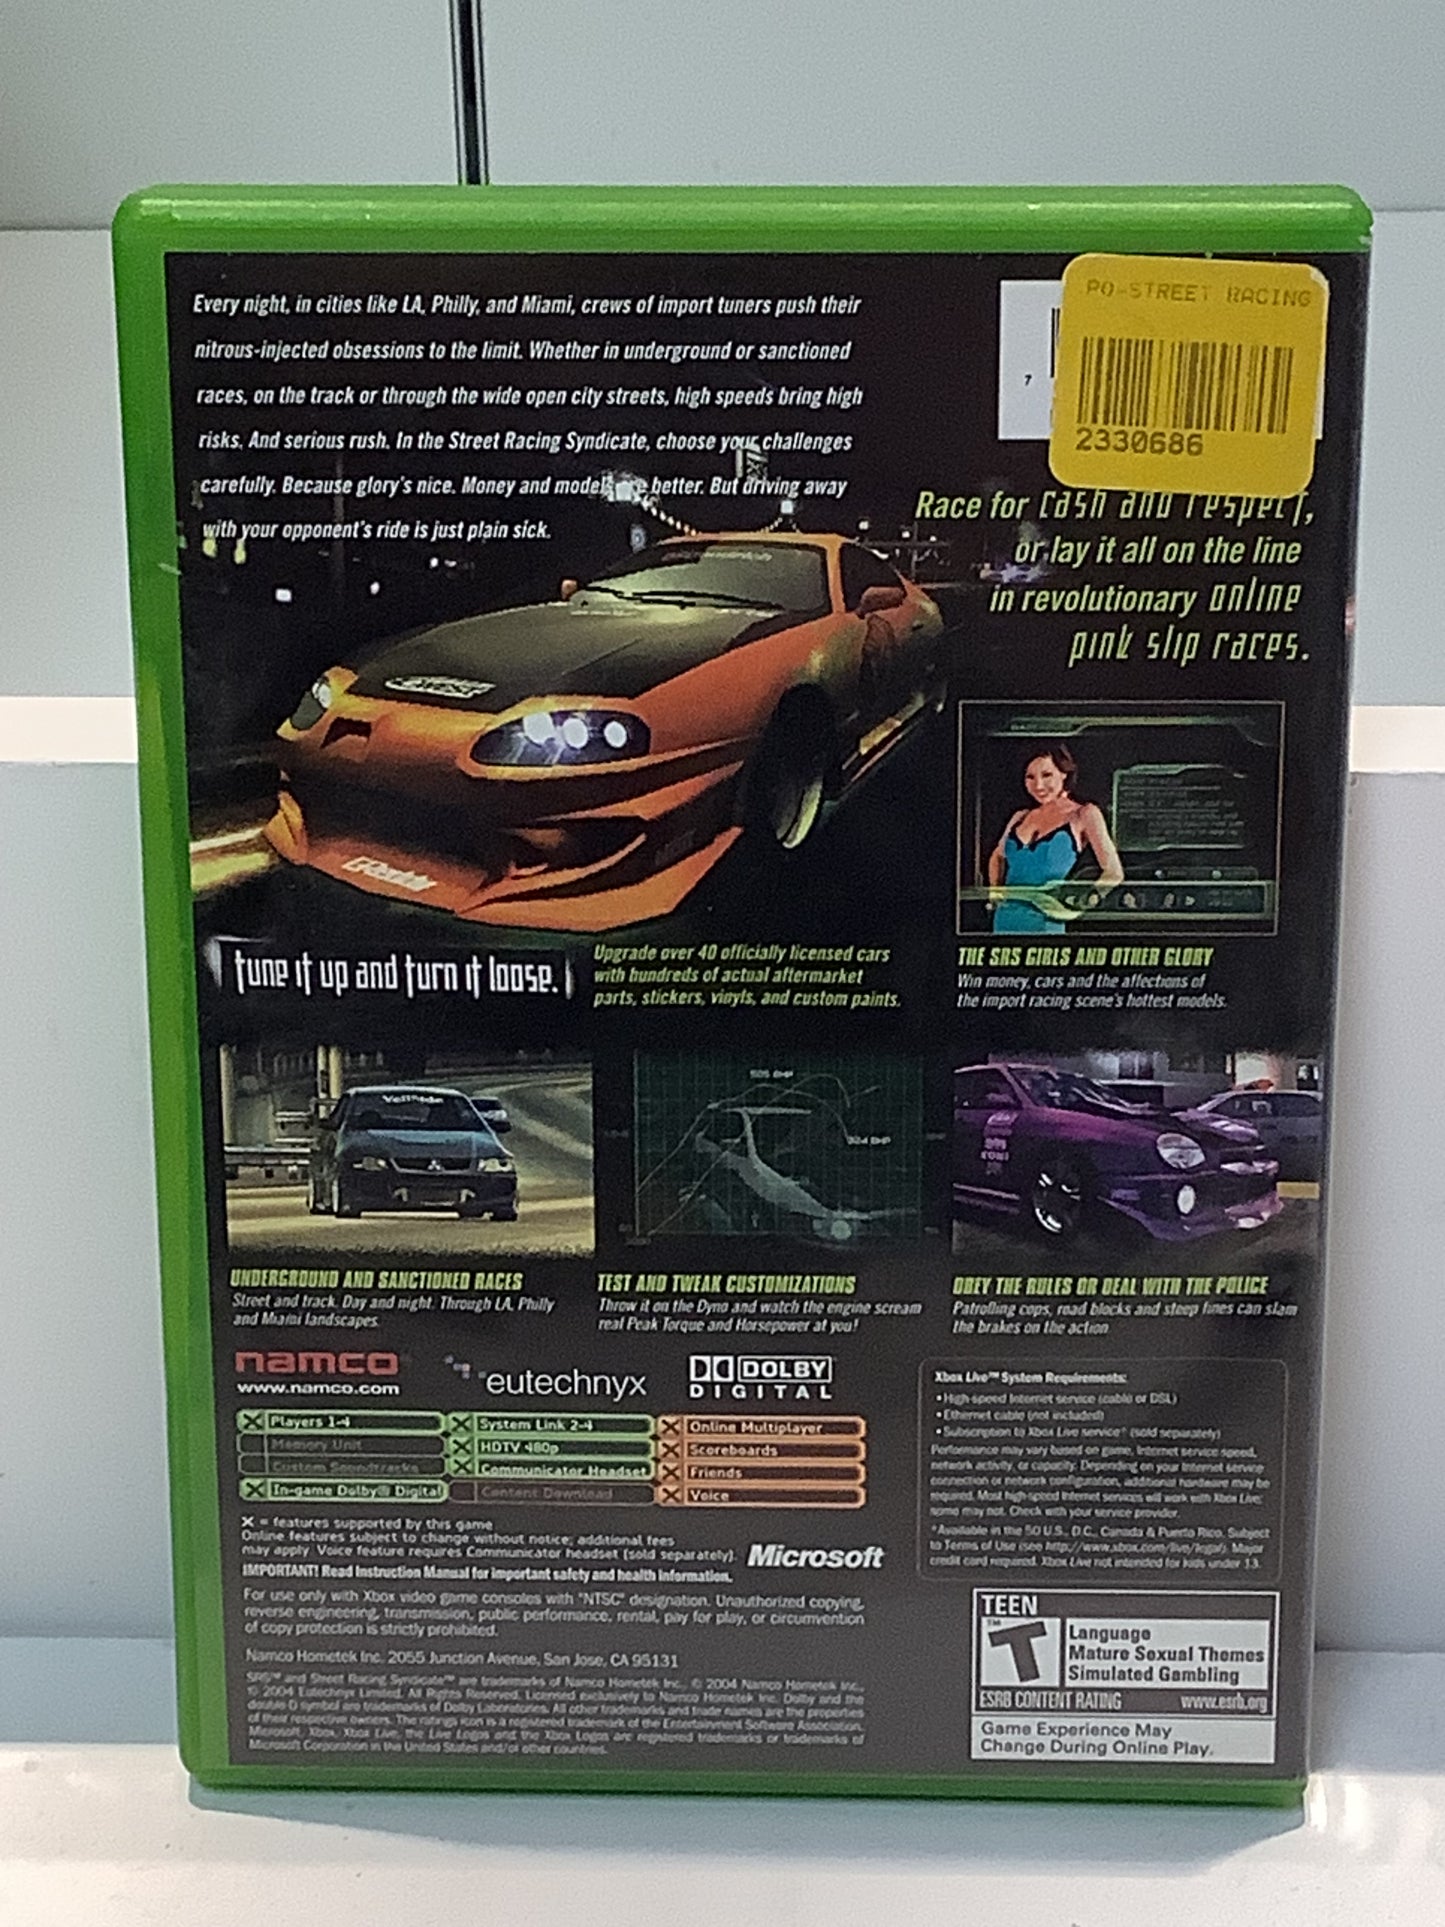 Street Racing Syndicate - Xbox